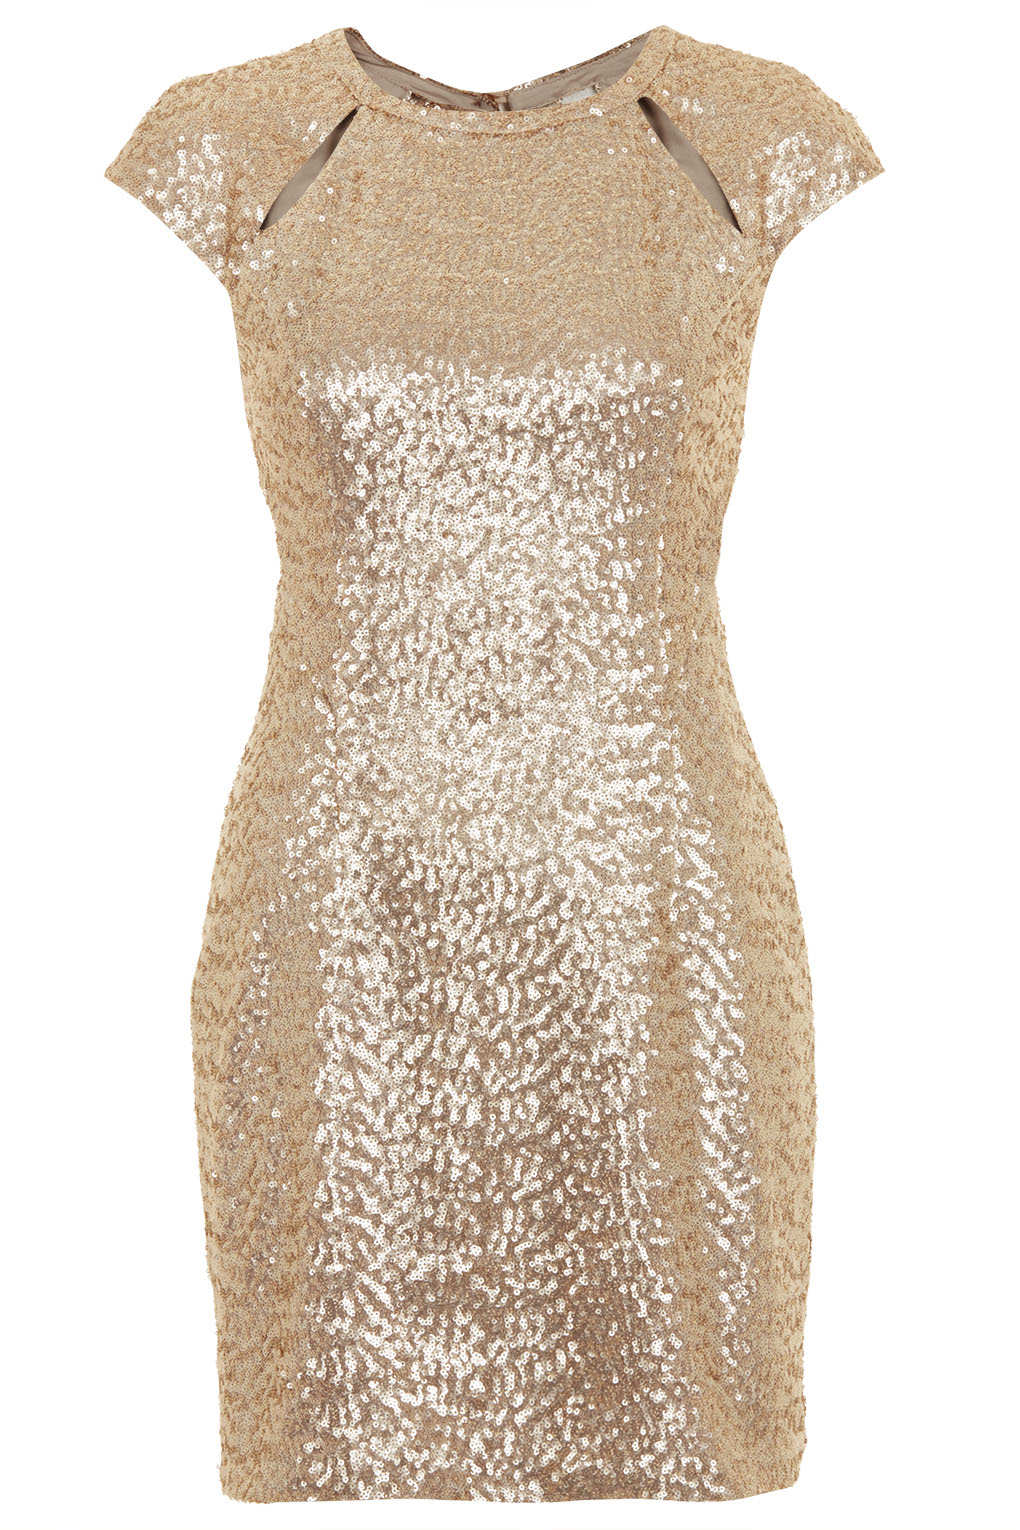 Topshop Sequin Cutout Mini Dress in Metallic | Lyst